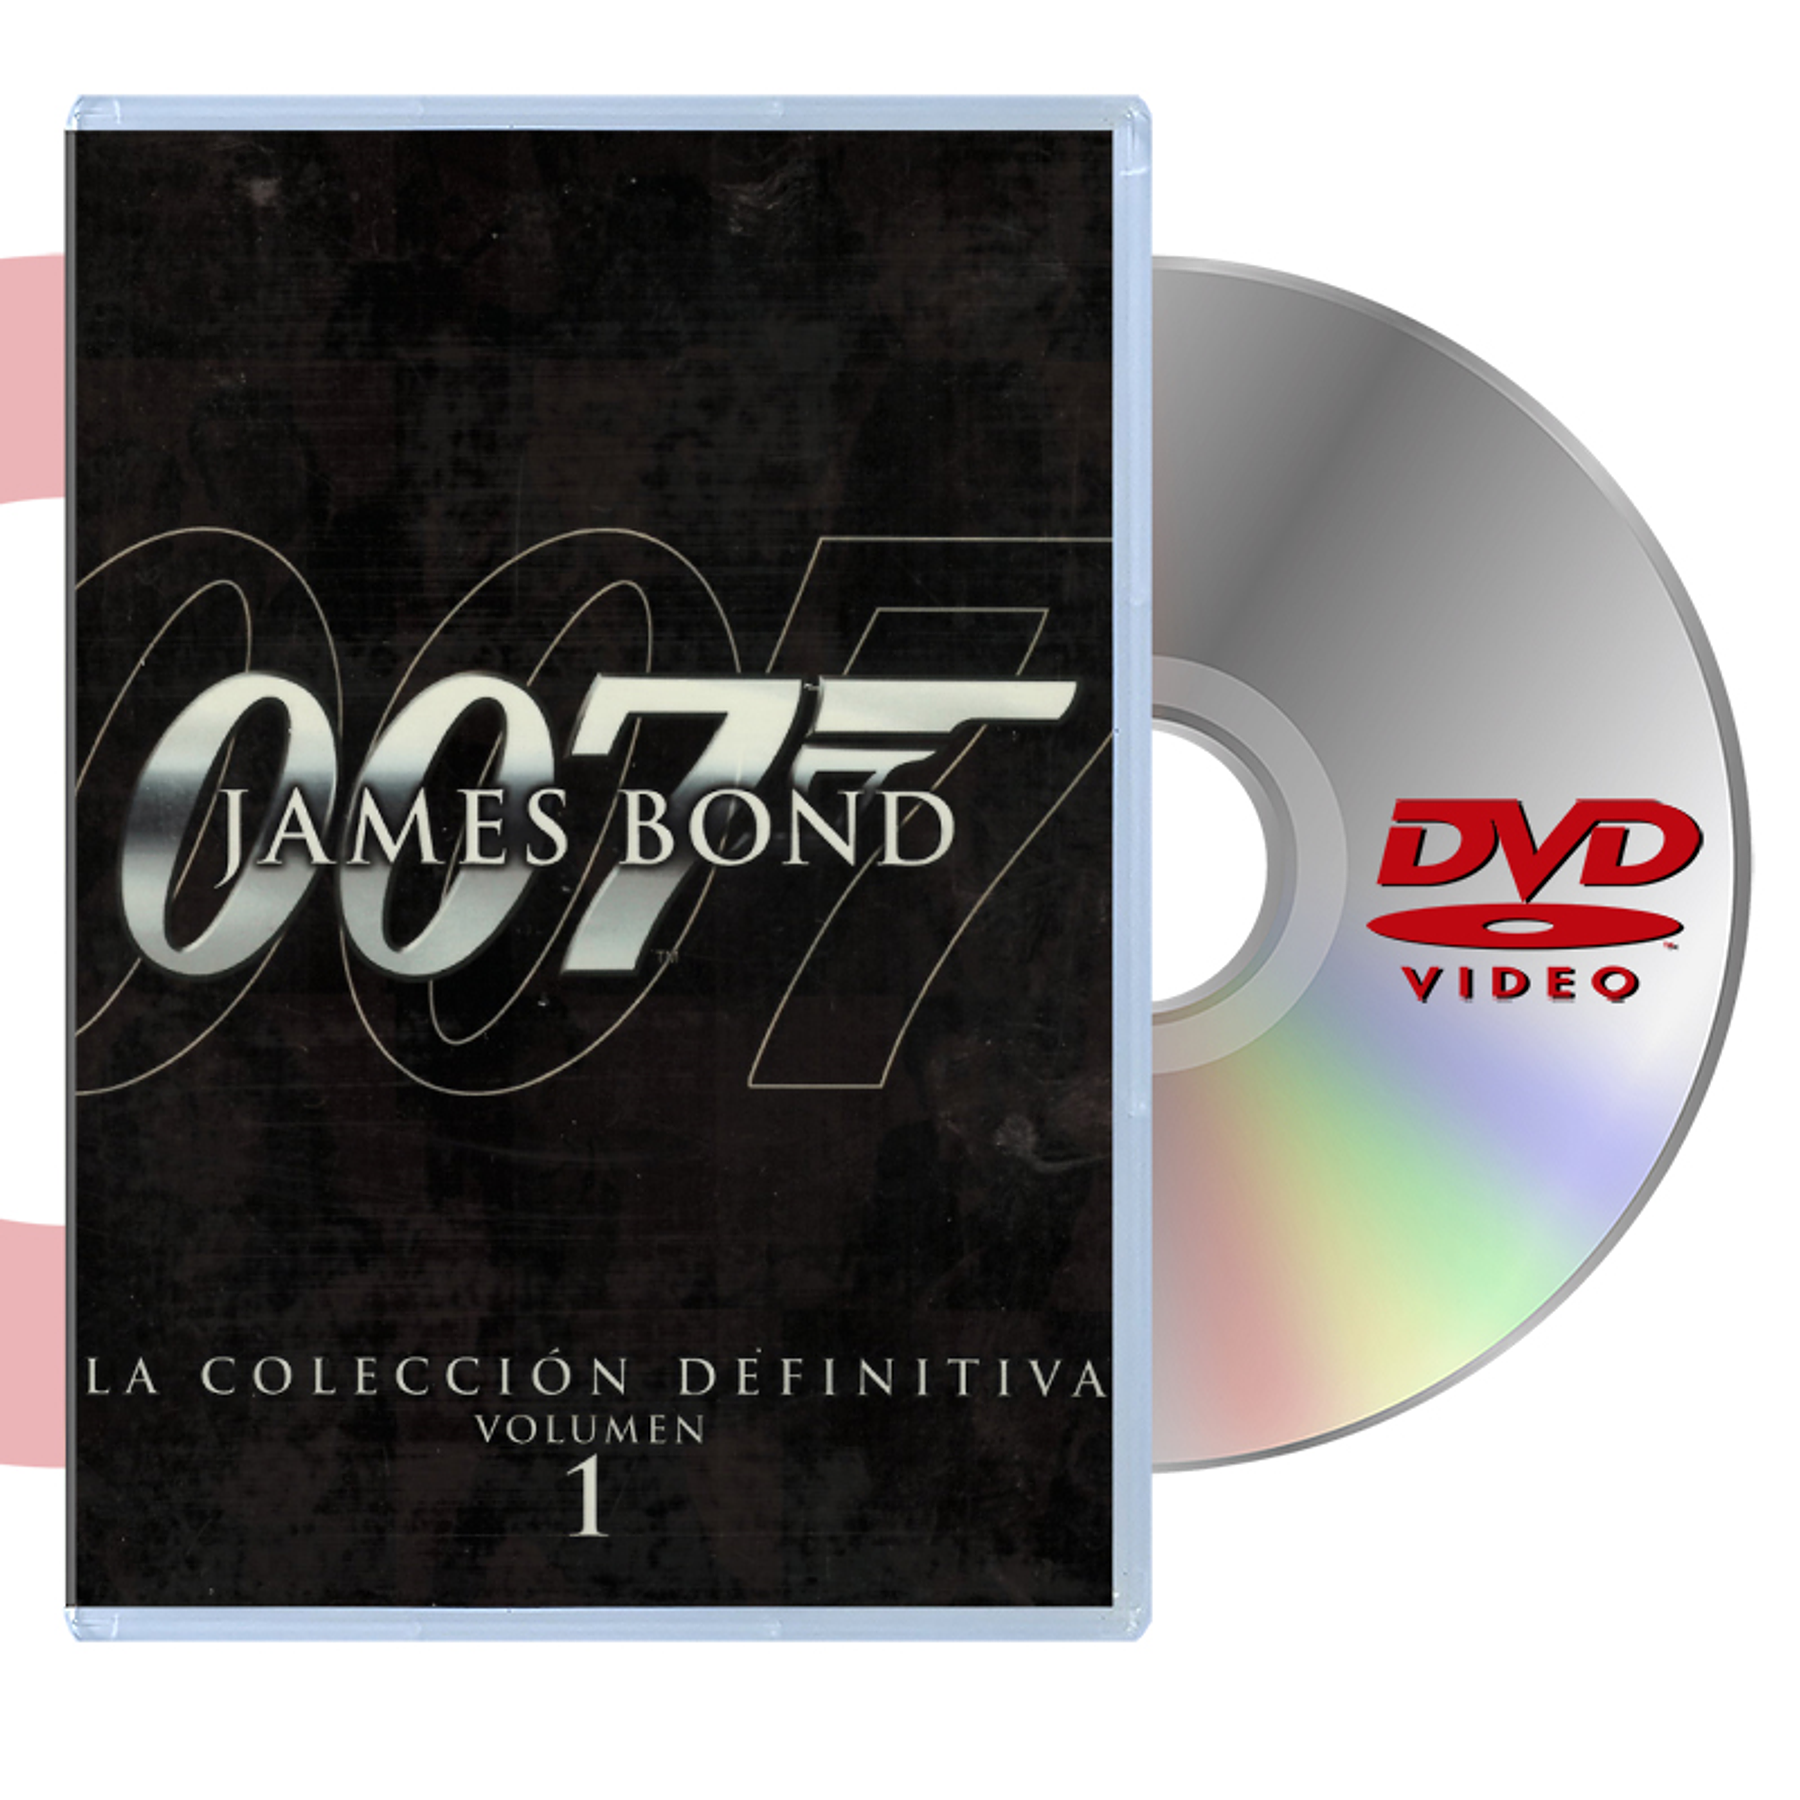 DVD JAMES BOND COLECCION DEFINITIVA VOL.1